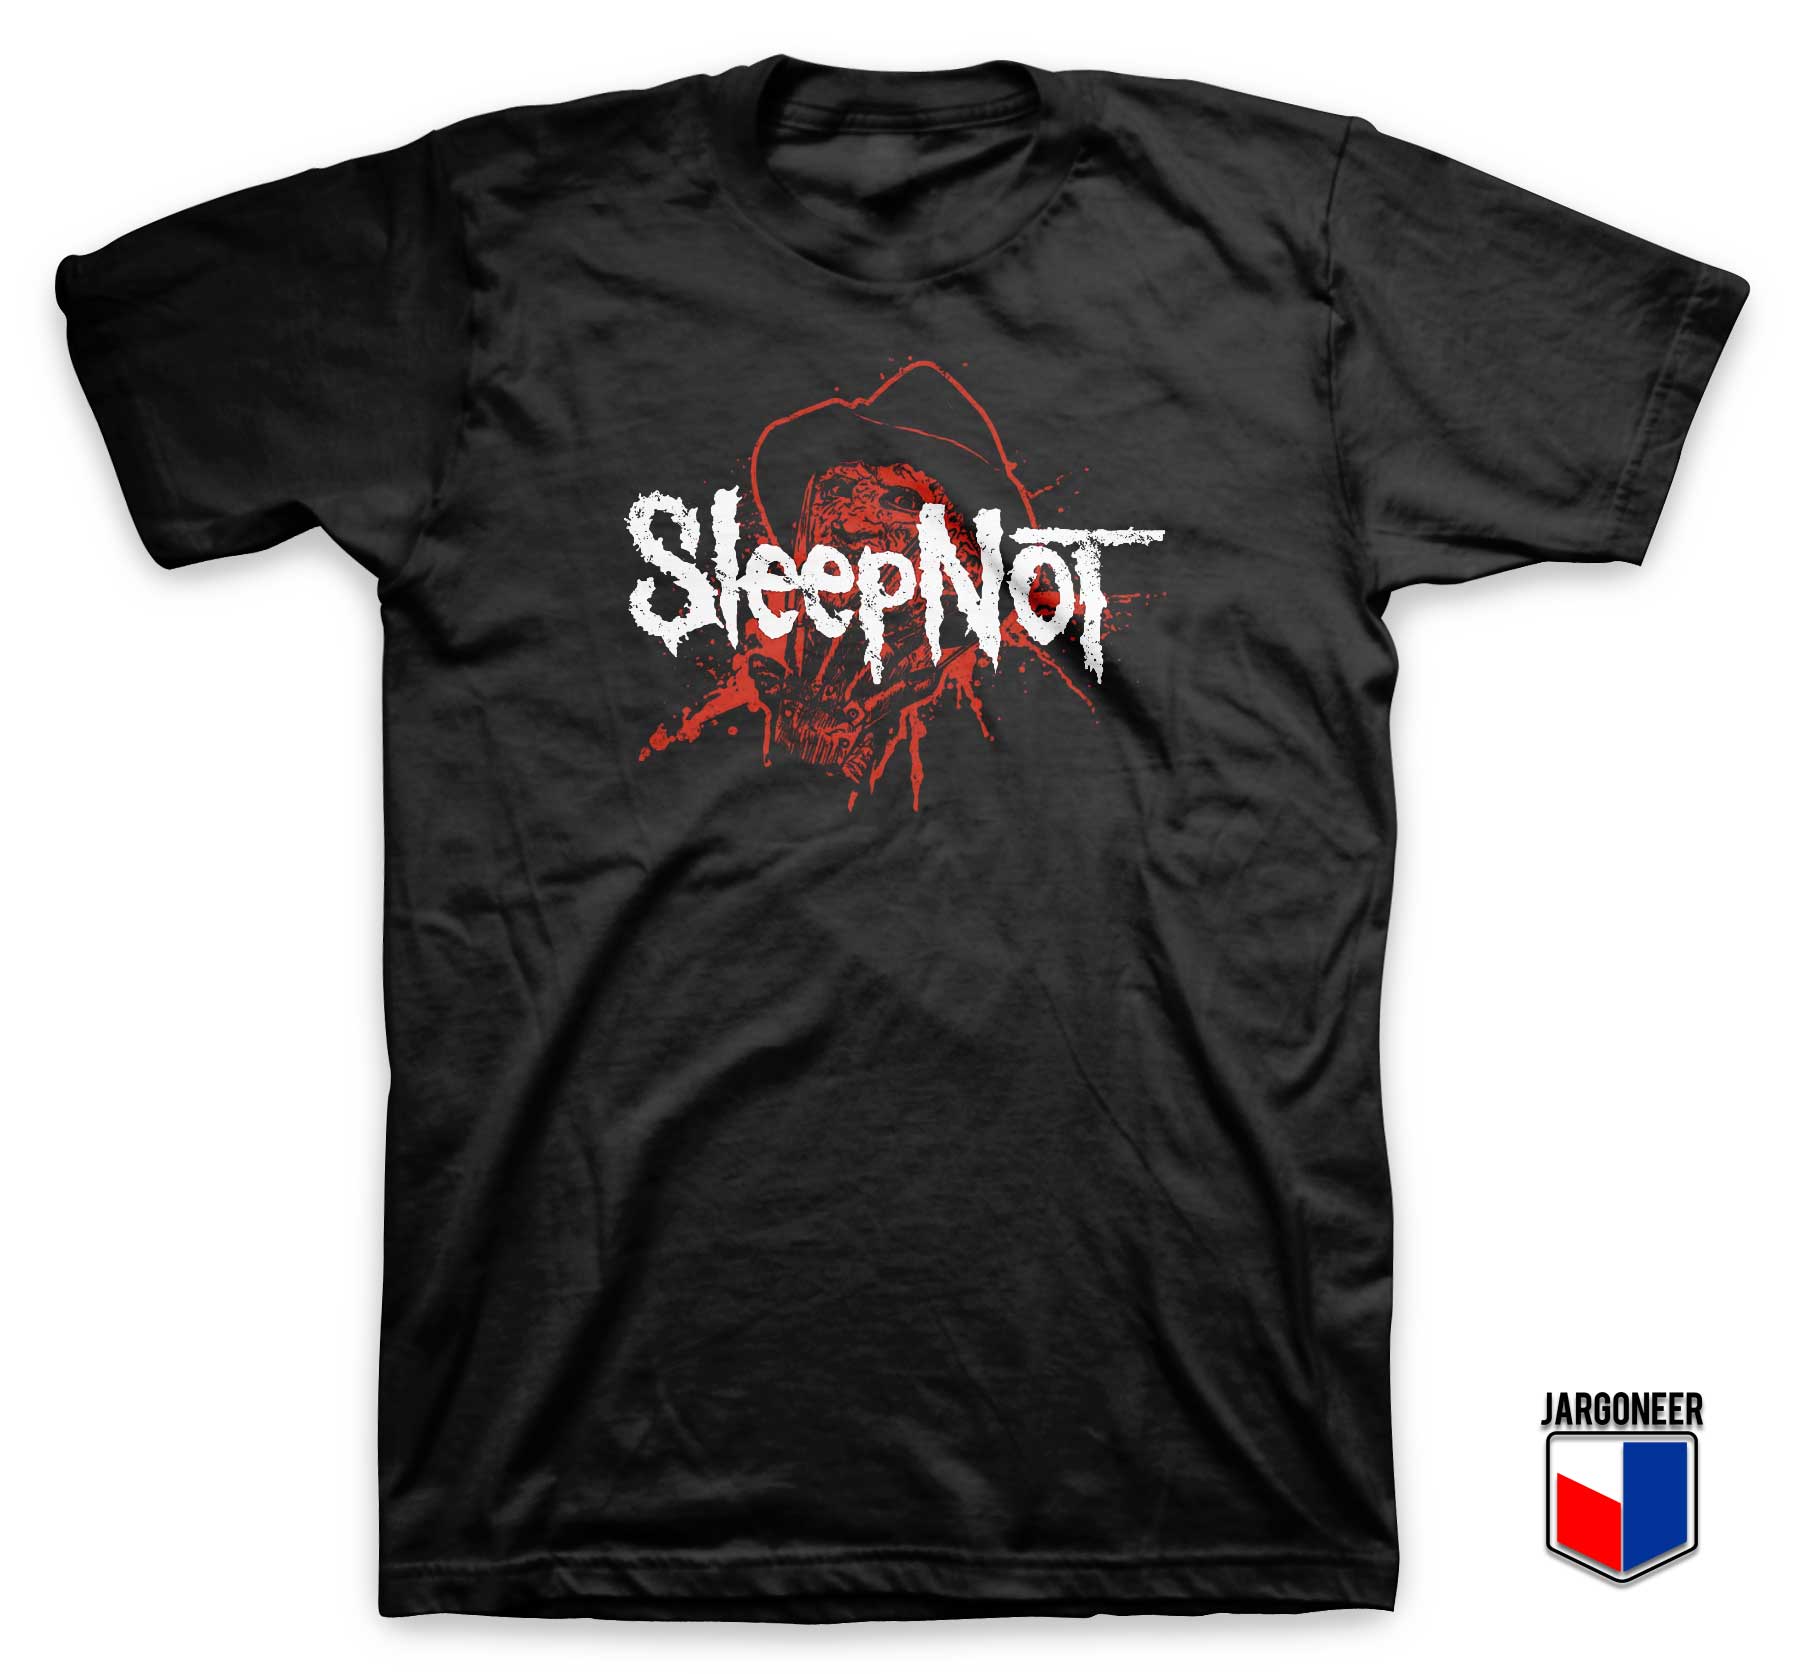 Sleepnot Horror Parody T Shirt - Shop Unique Graphic Cool Shirt Designs